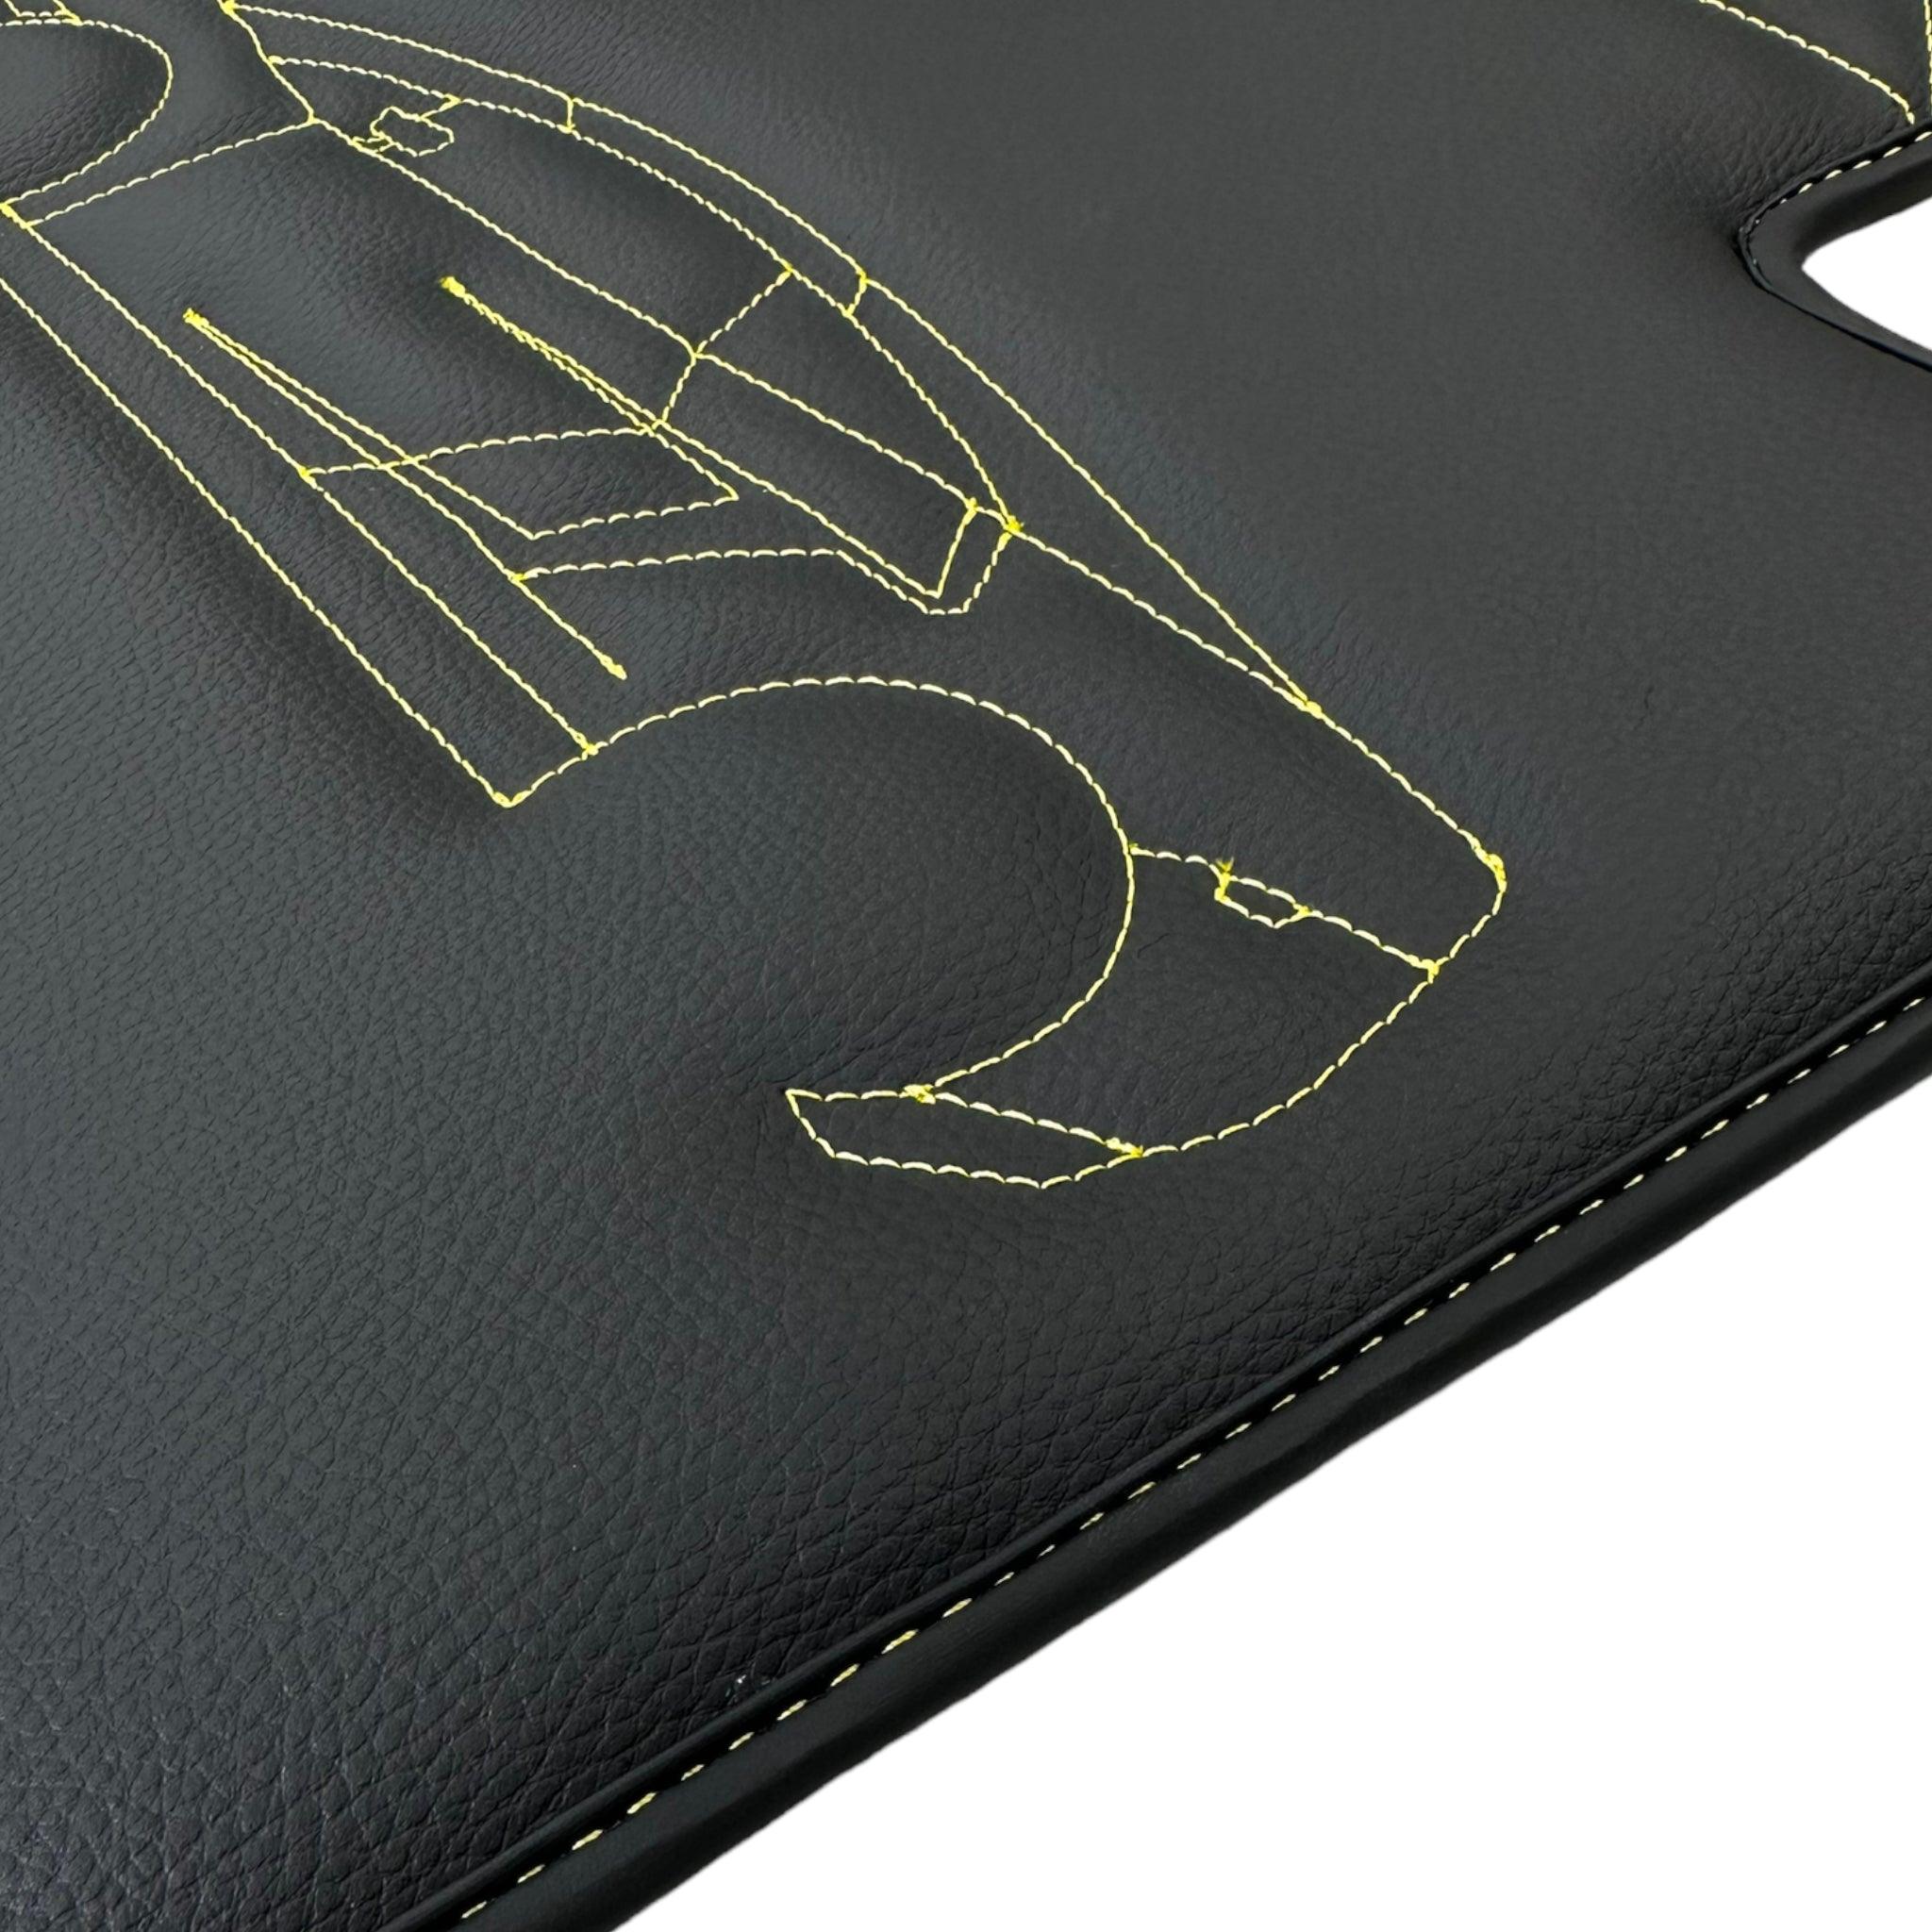 Leather Black Floor Mats for Lamborghini Gallardo Yellow Sewing | ER56 Design